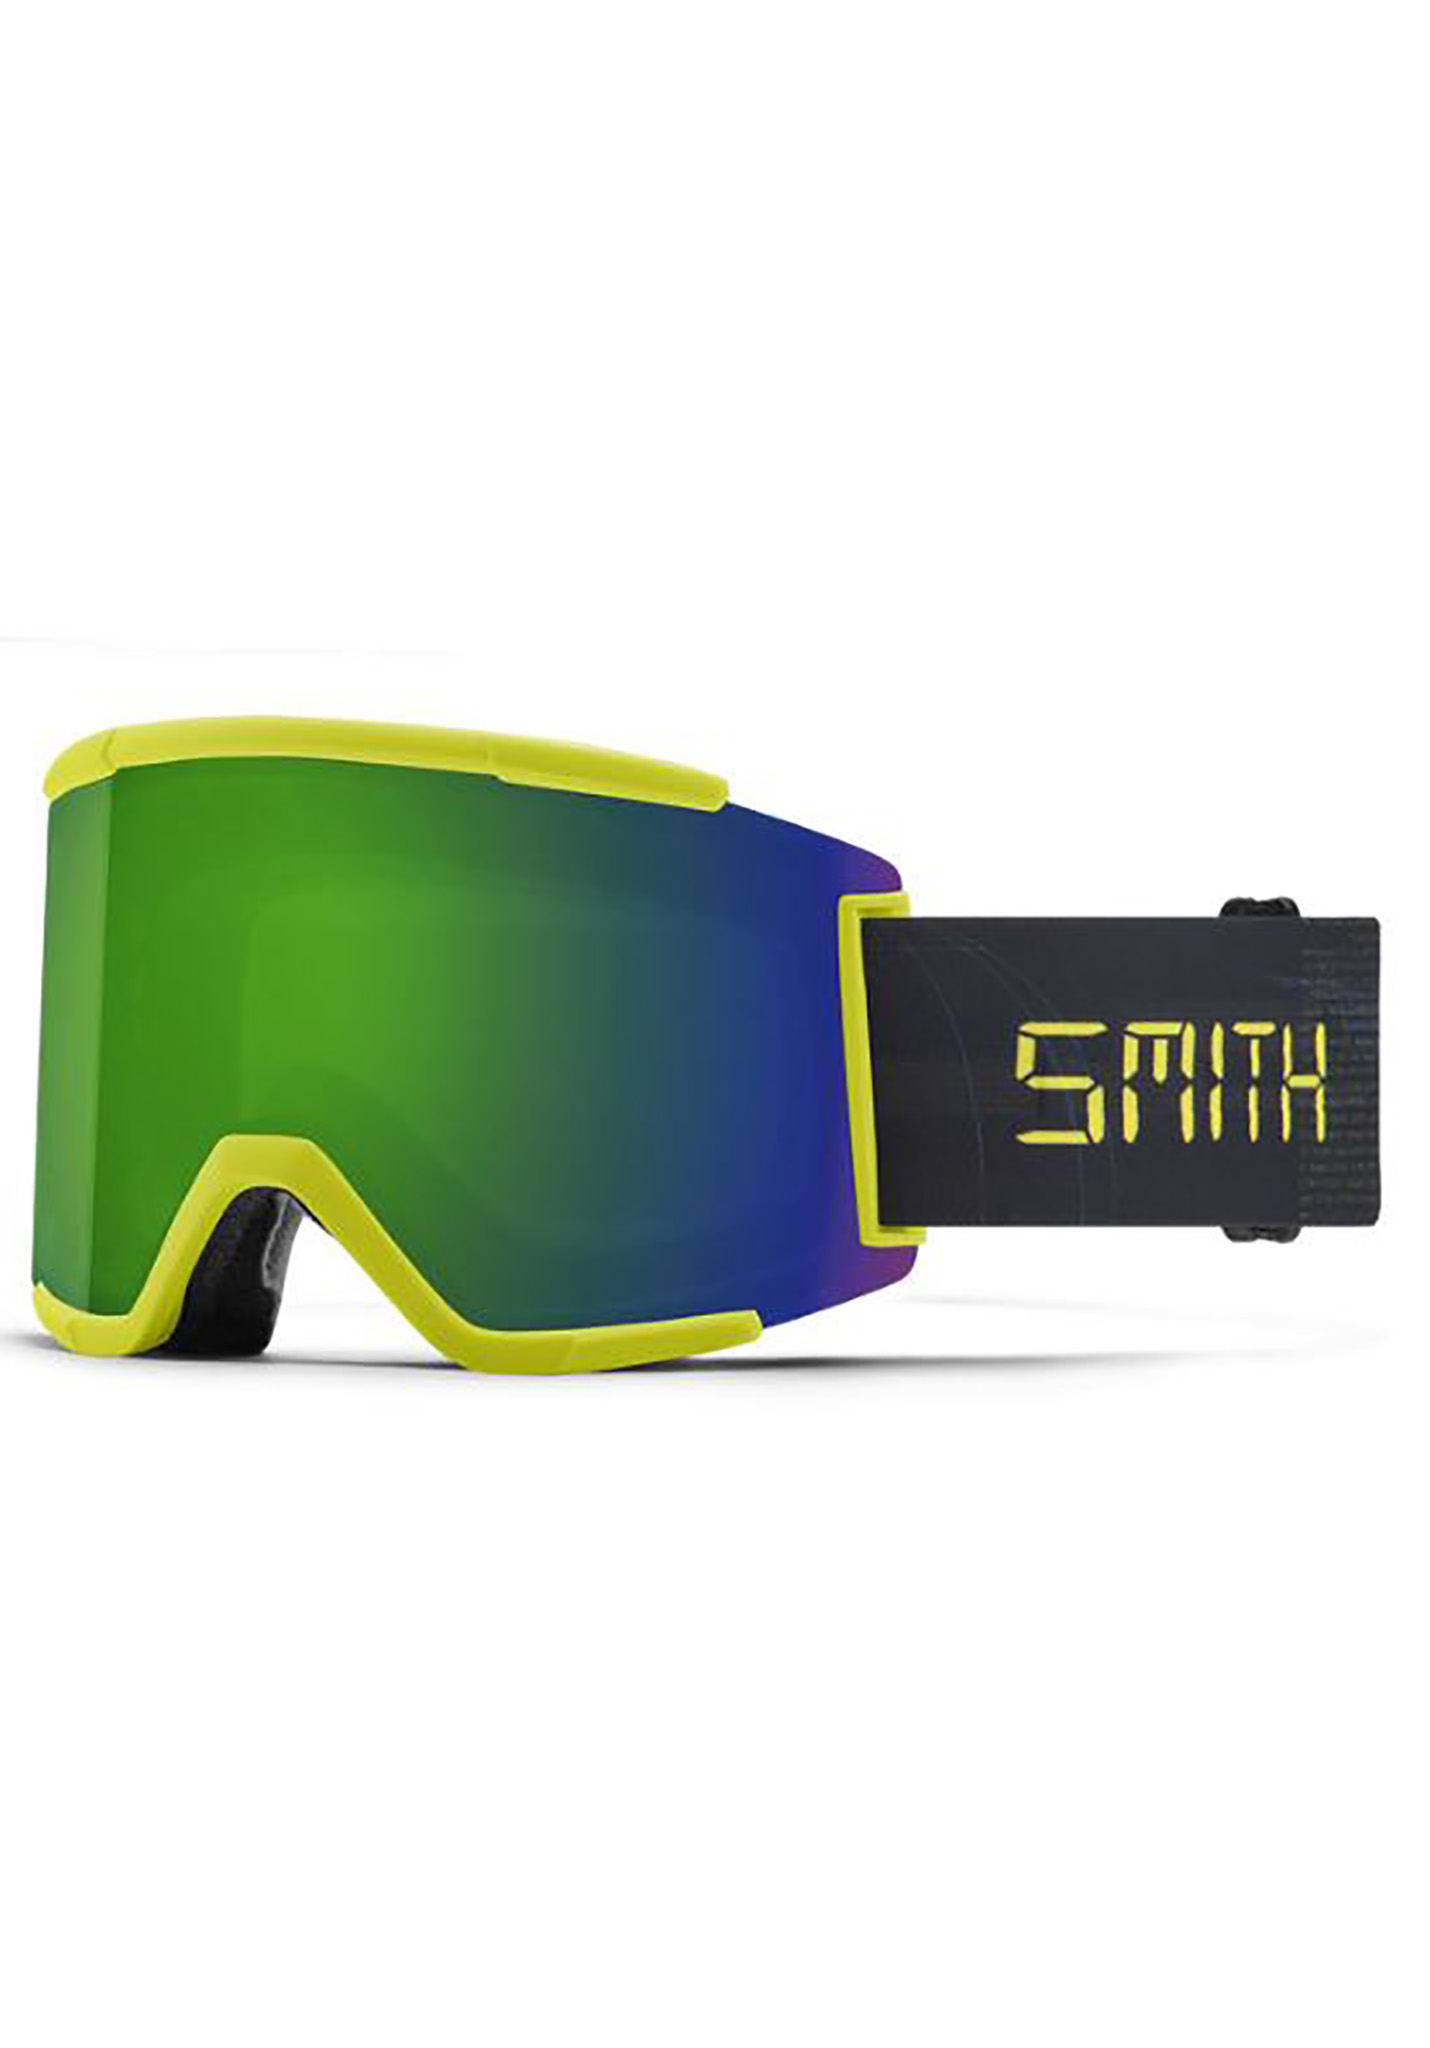 Smith Squad XL Snowboardbrillen grün/blau One Size